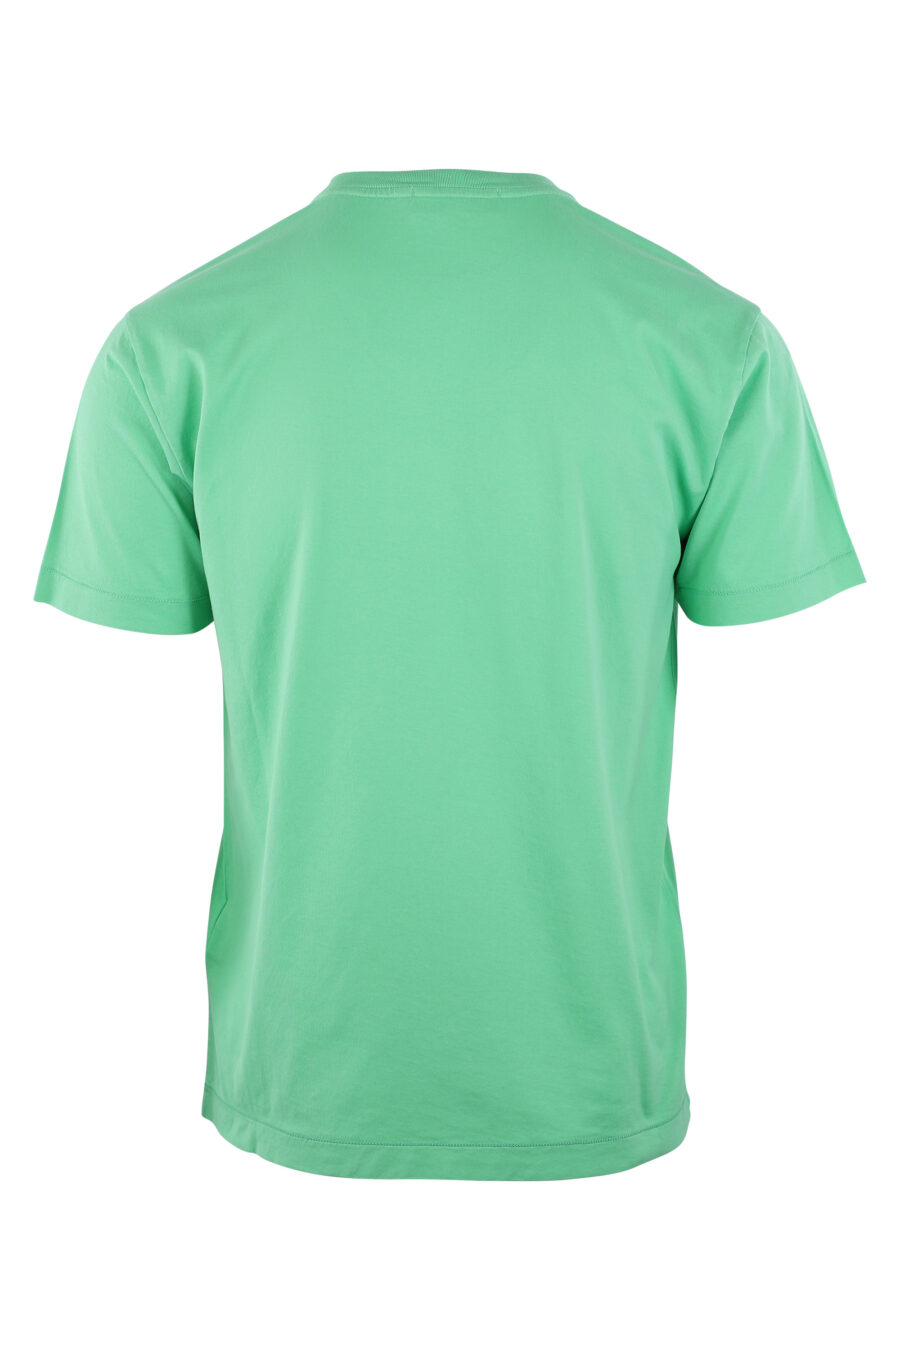 Camiseta verde claro con logo parche - IMG 3143